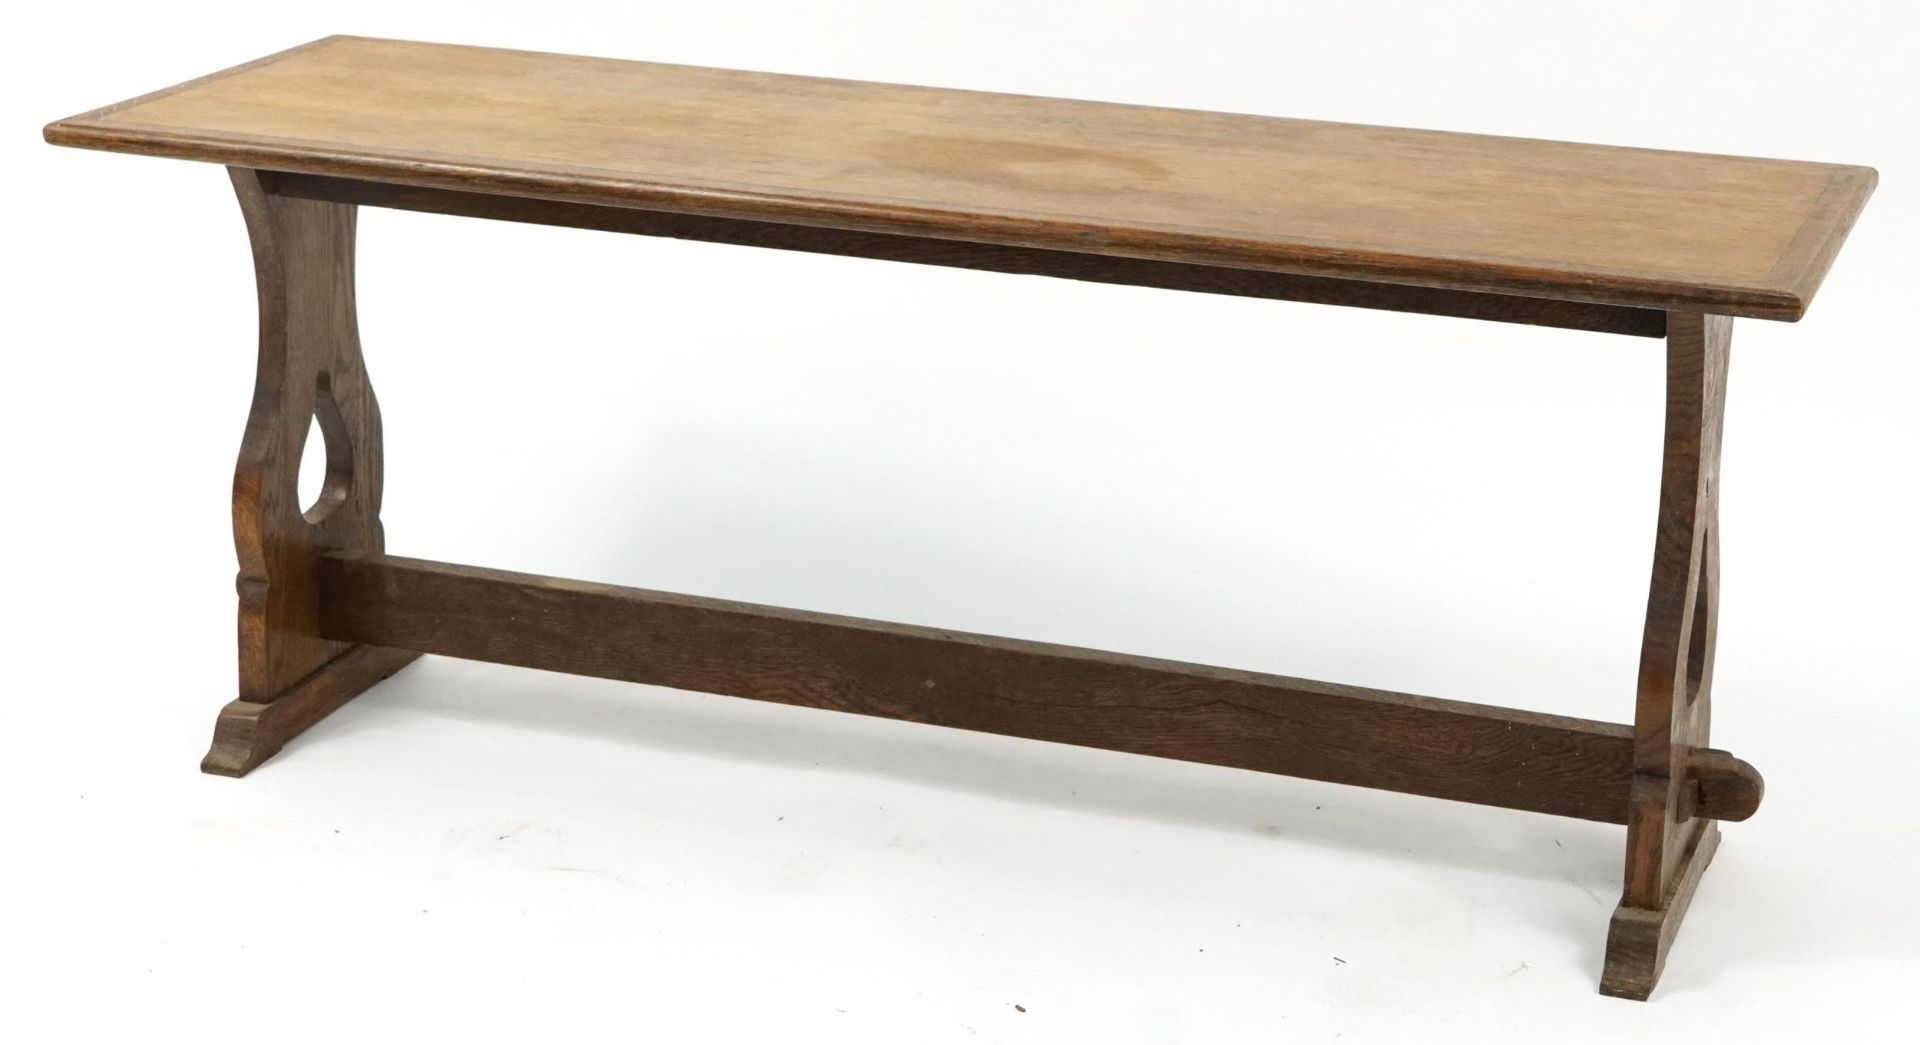 Rectangular oak coffee table, 47cm H x 116cm W x 37.5cm D